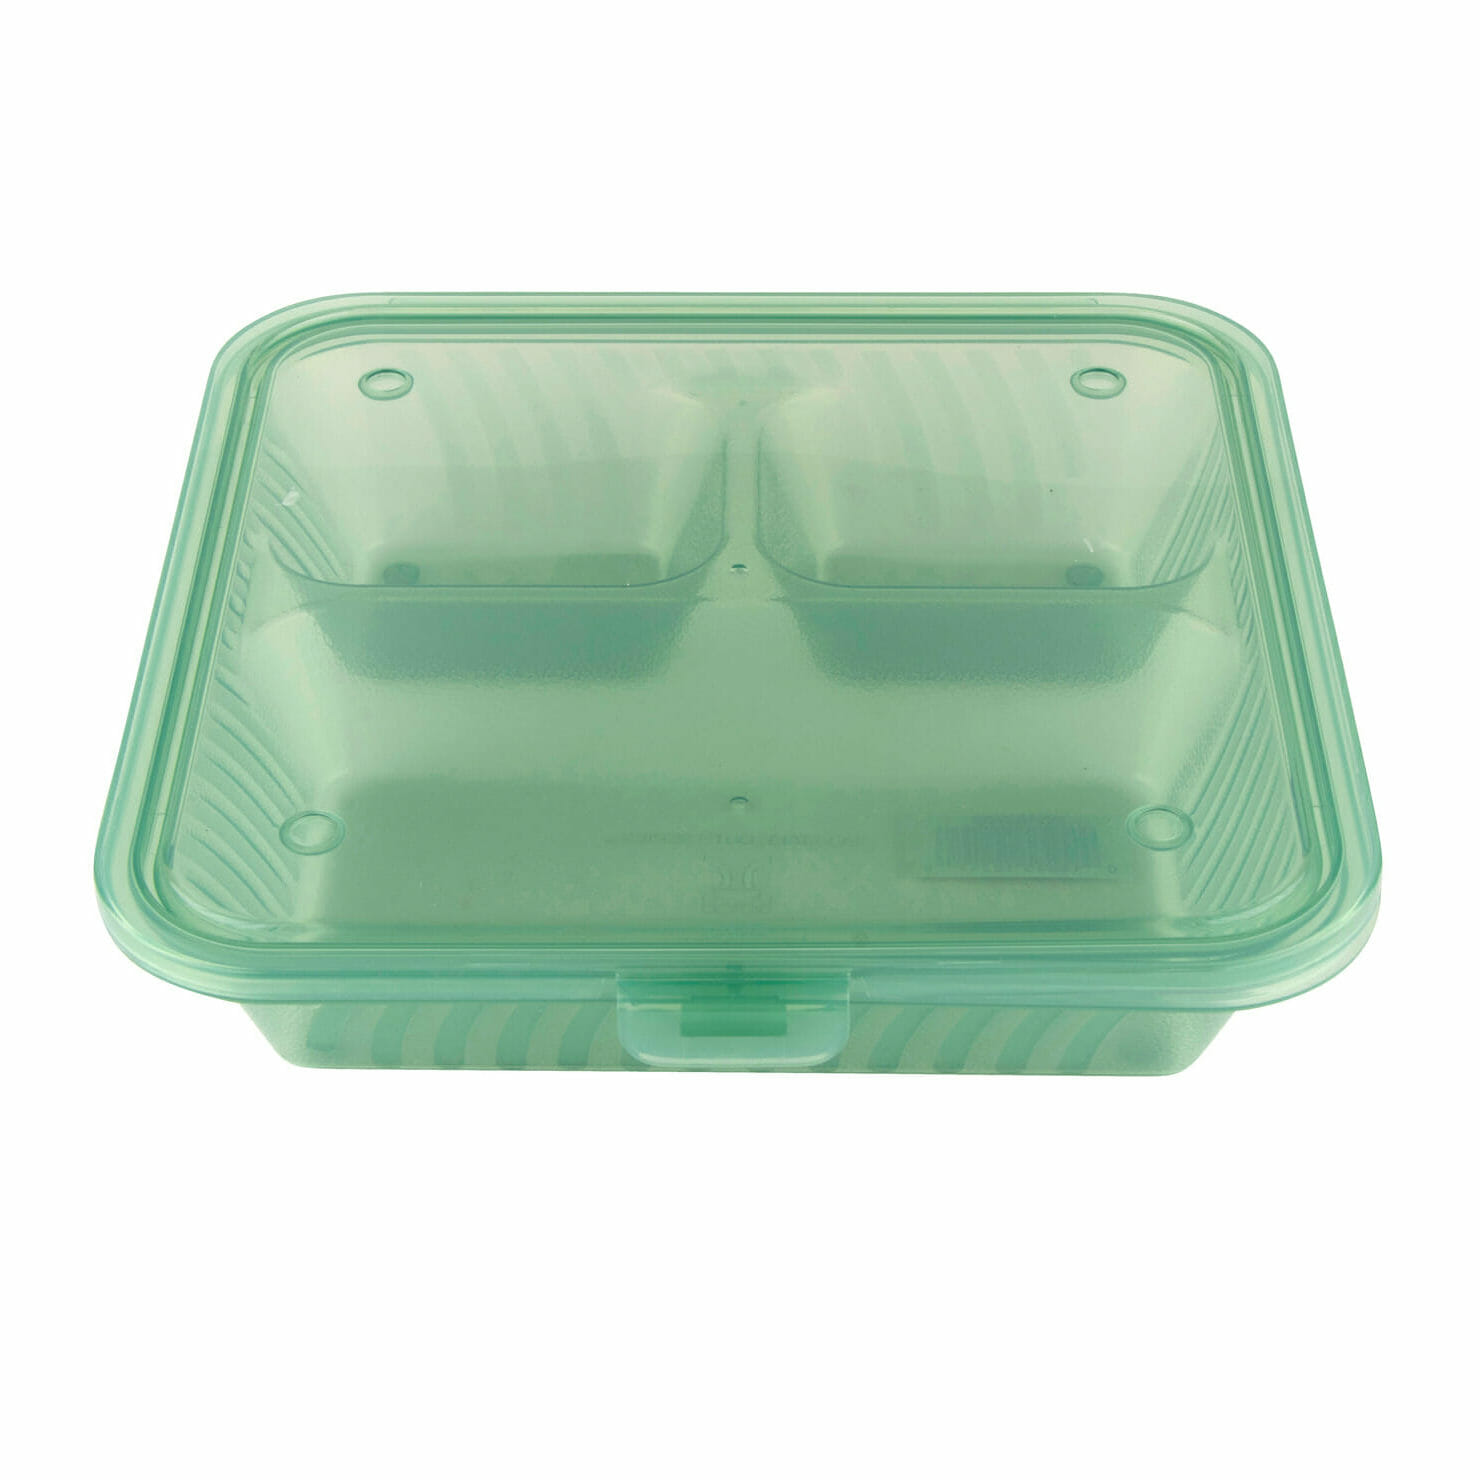 GET EC-09-1 Reusable 3 Compartment Leak Resistant Food Containers 12/Case